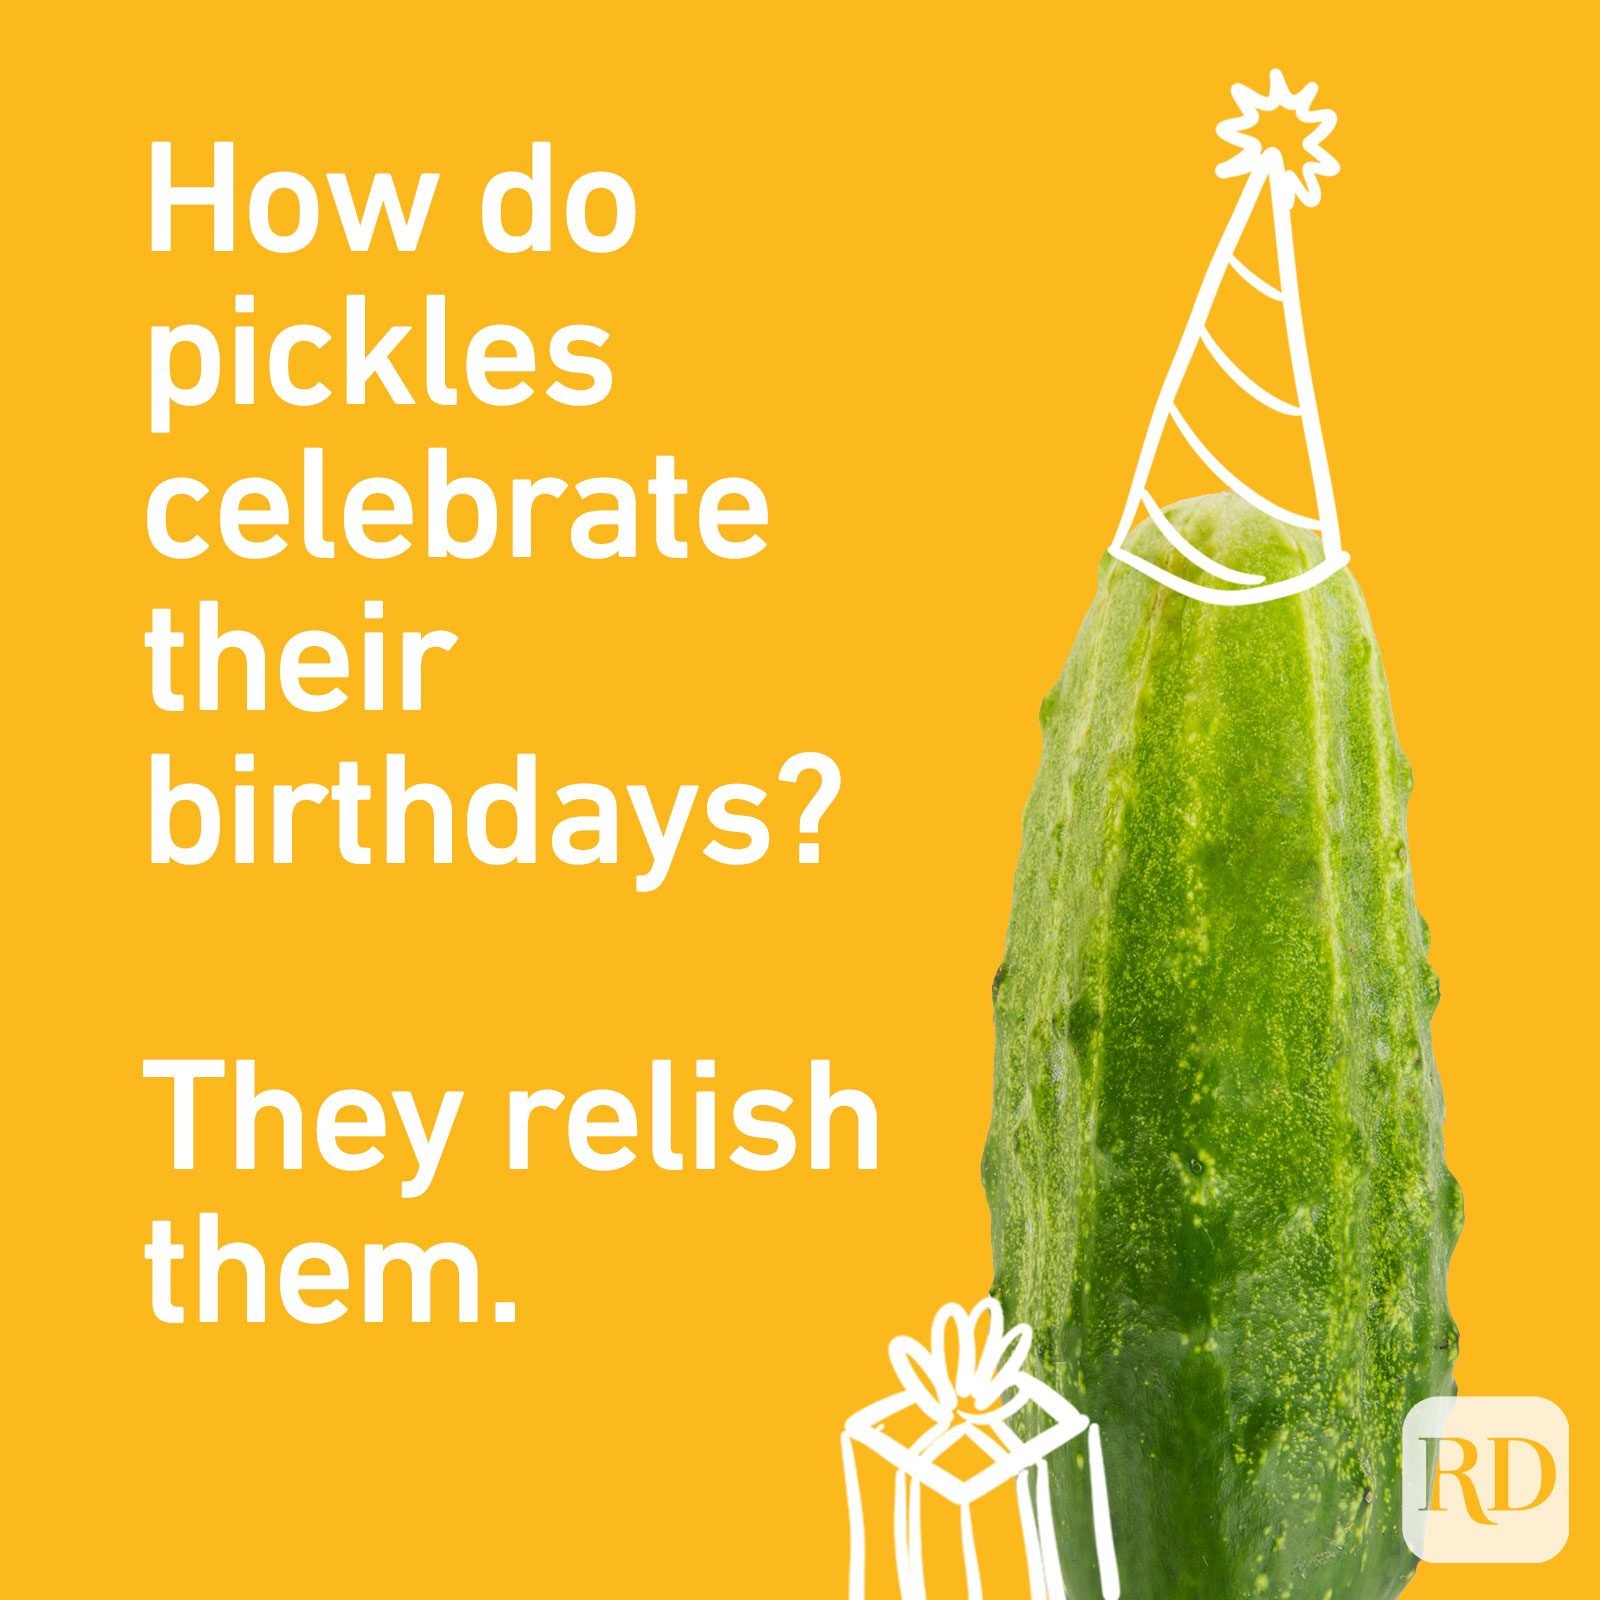 How do pickles celebrate their birthdays? They relish them.